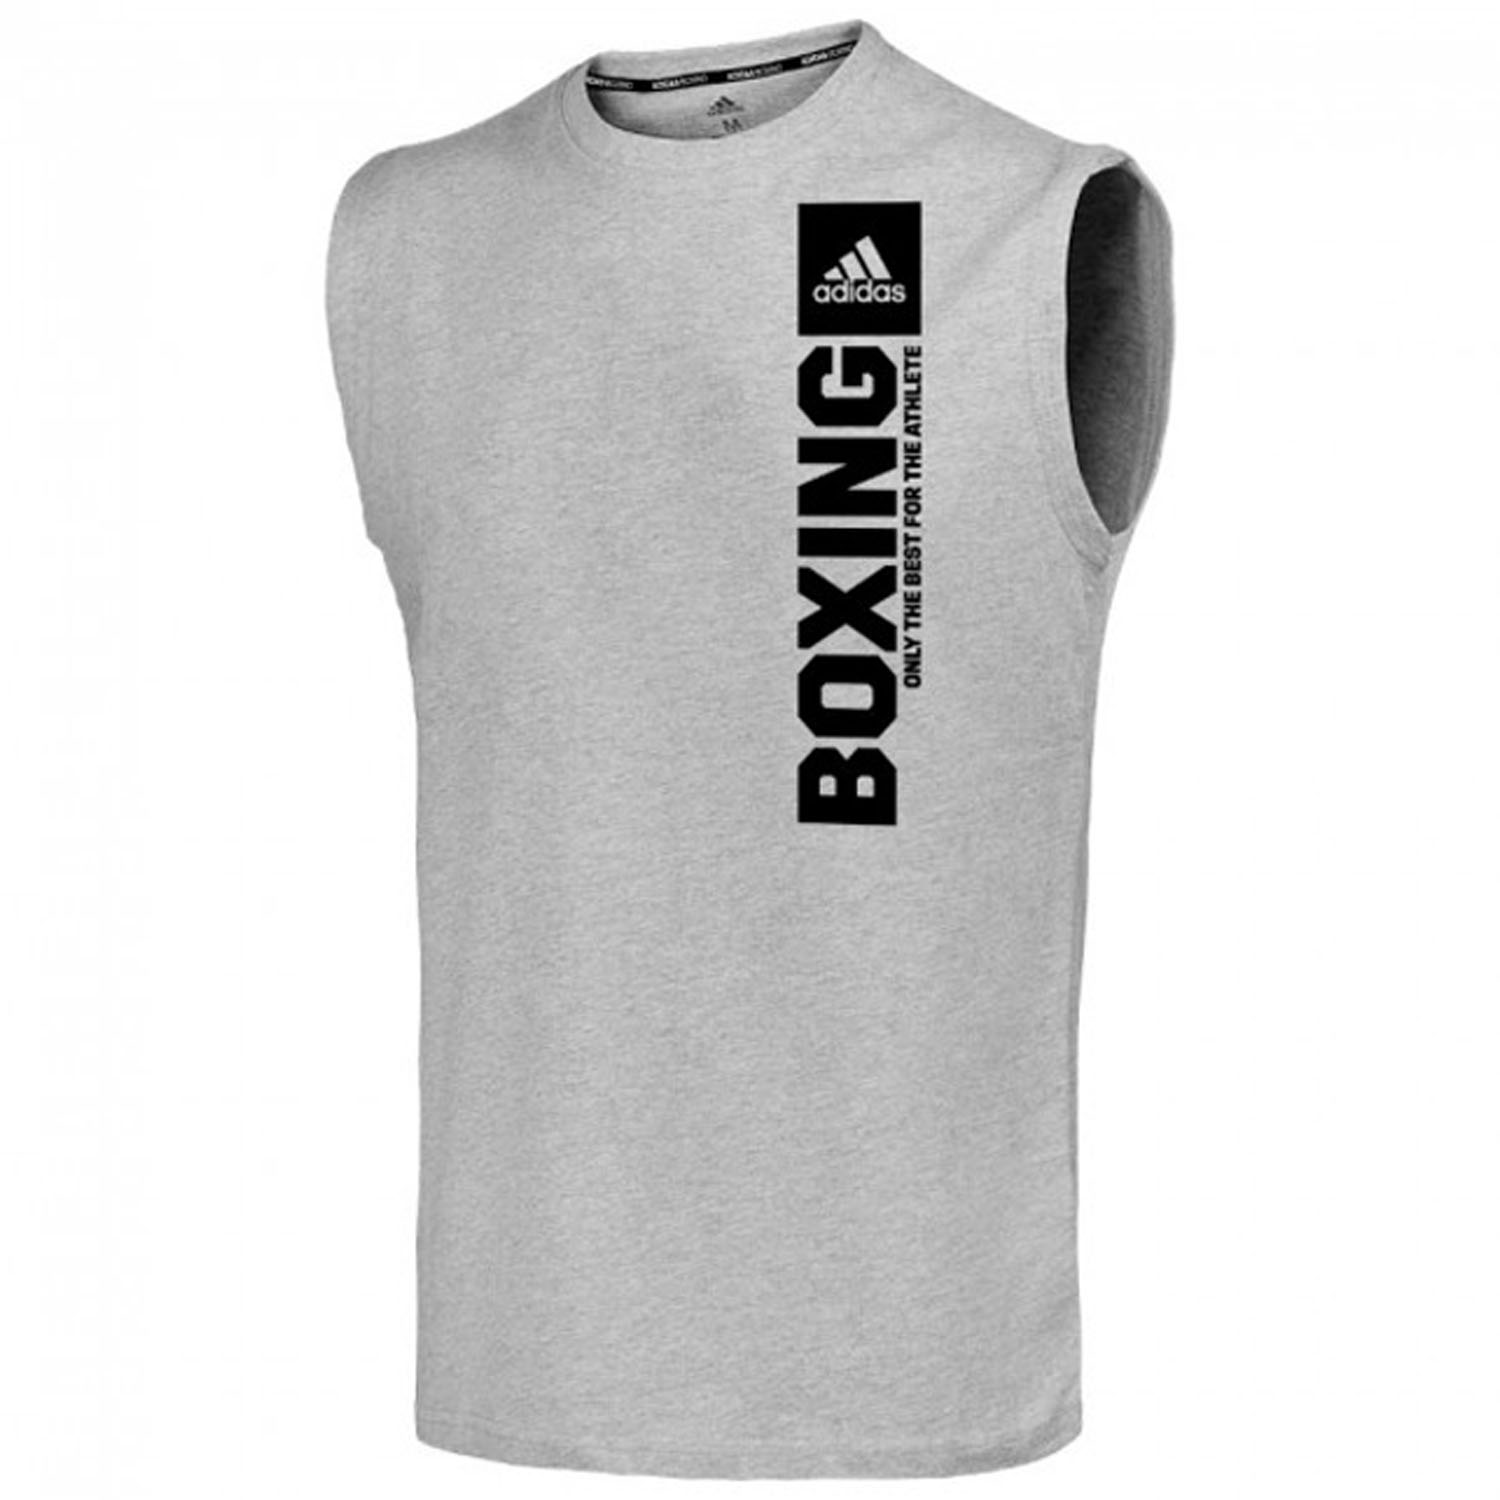 adidas Sleeveless T-Shirt, Community Vertical Boxing, grau